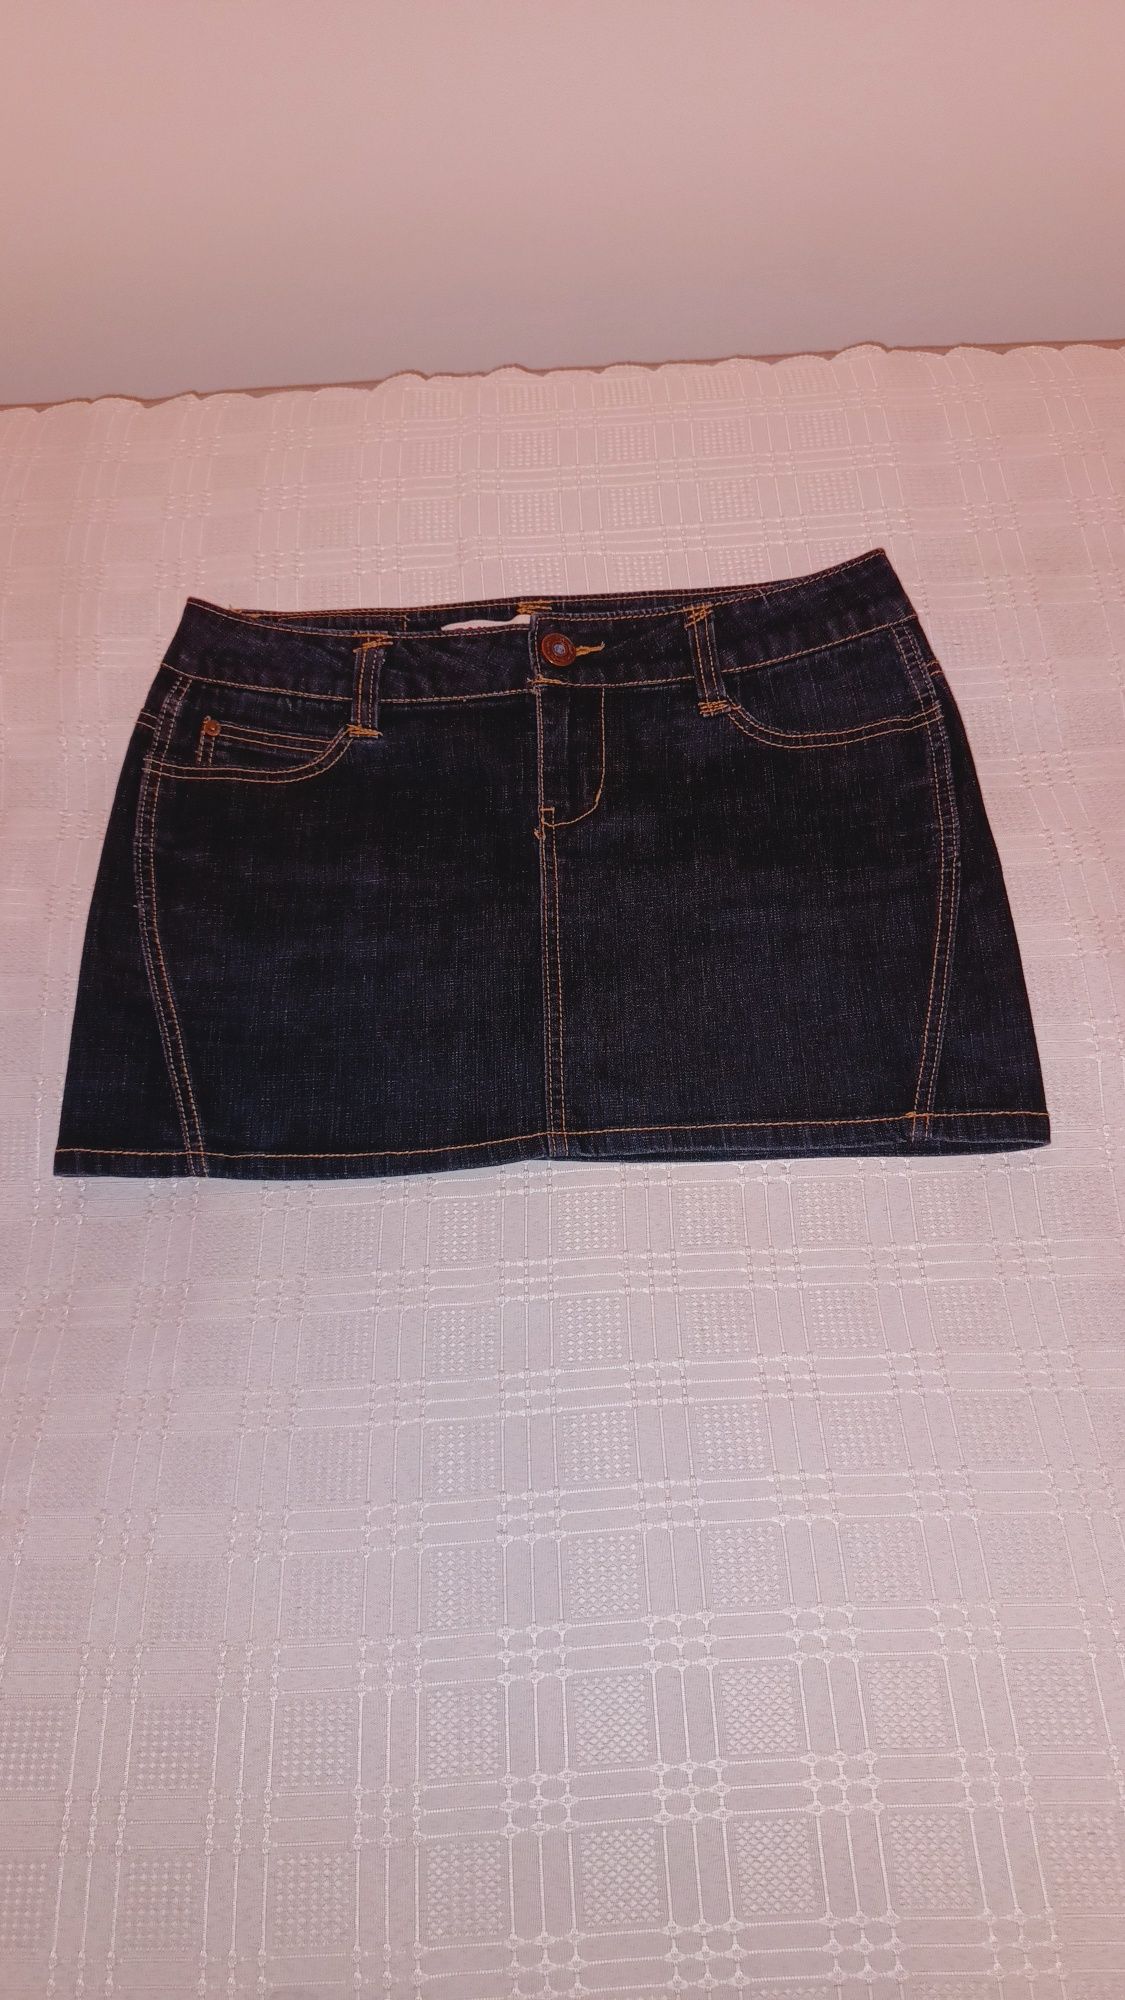 Spódnica dżinsowa mini, rozmiar 38